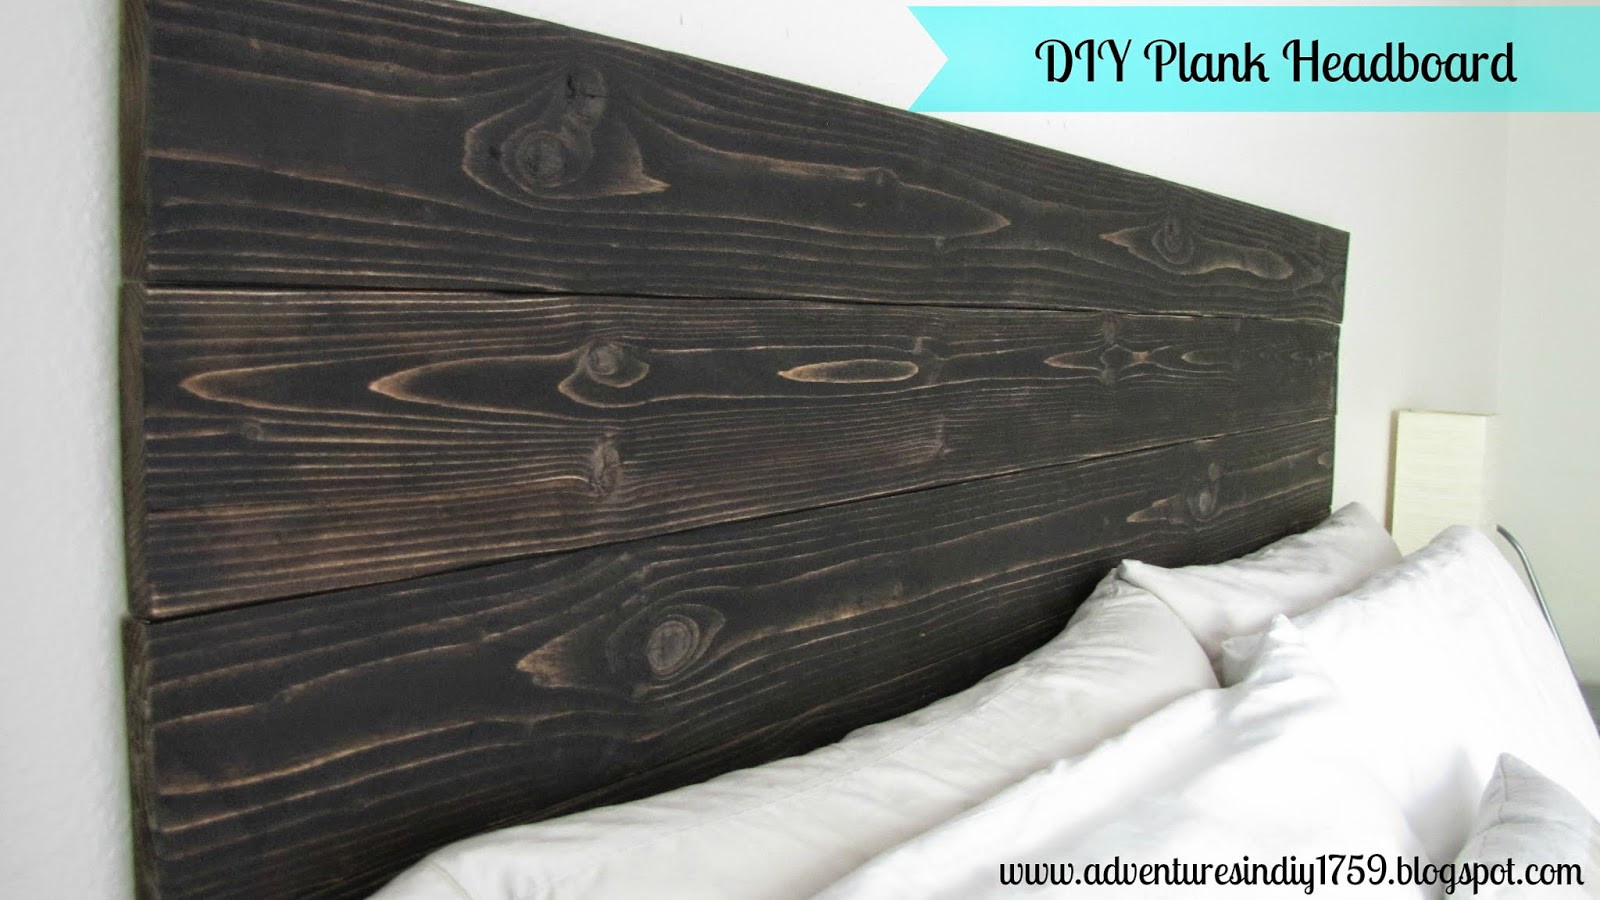 Best ideas about DIY Wood Plank Headboard
. Save or Pin Adventures in DIY Plank Headboard Now.